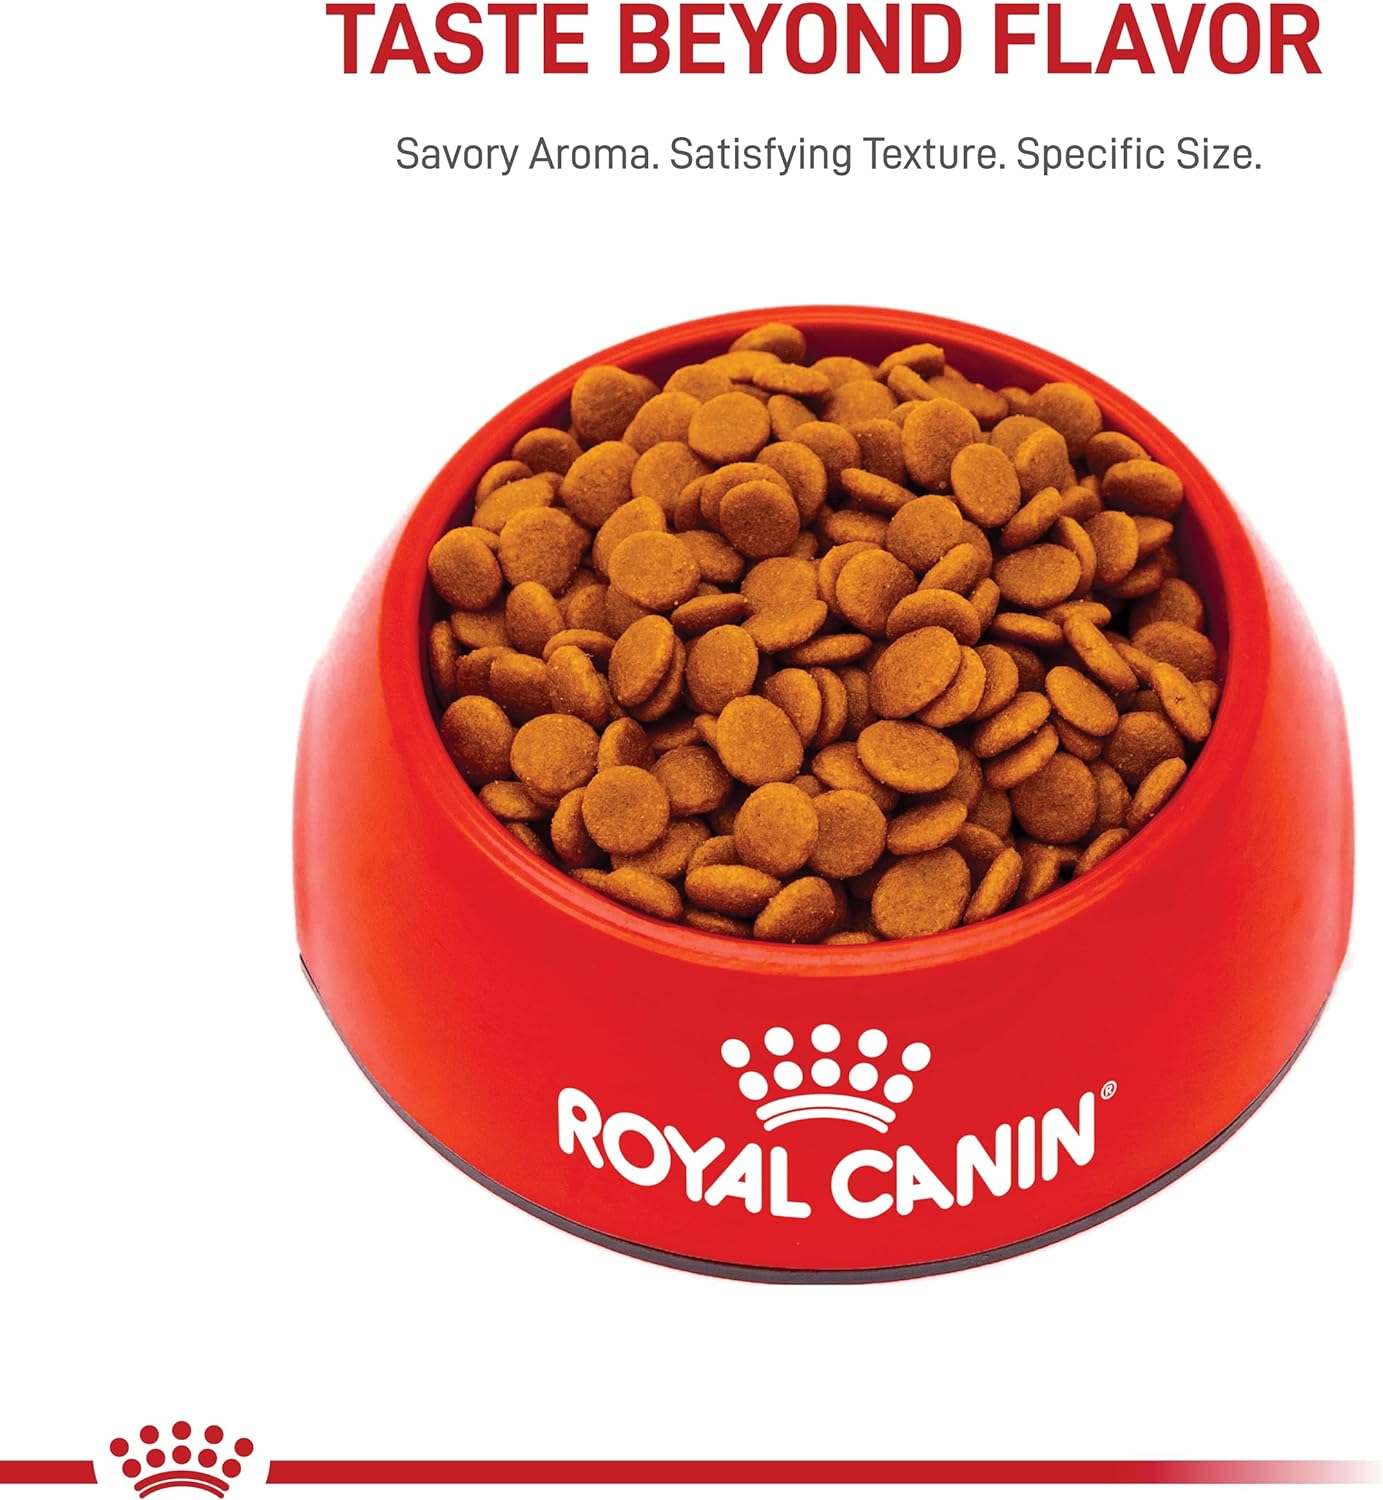 Royal Canin Small Digestive Care Dry Dog Food, 3.5 lb bag : Pet Supplies